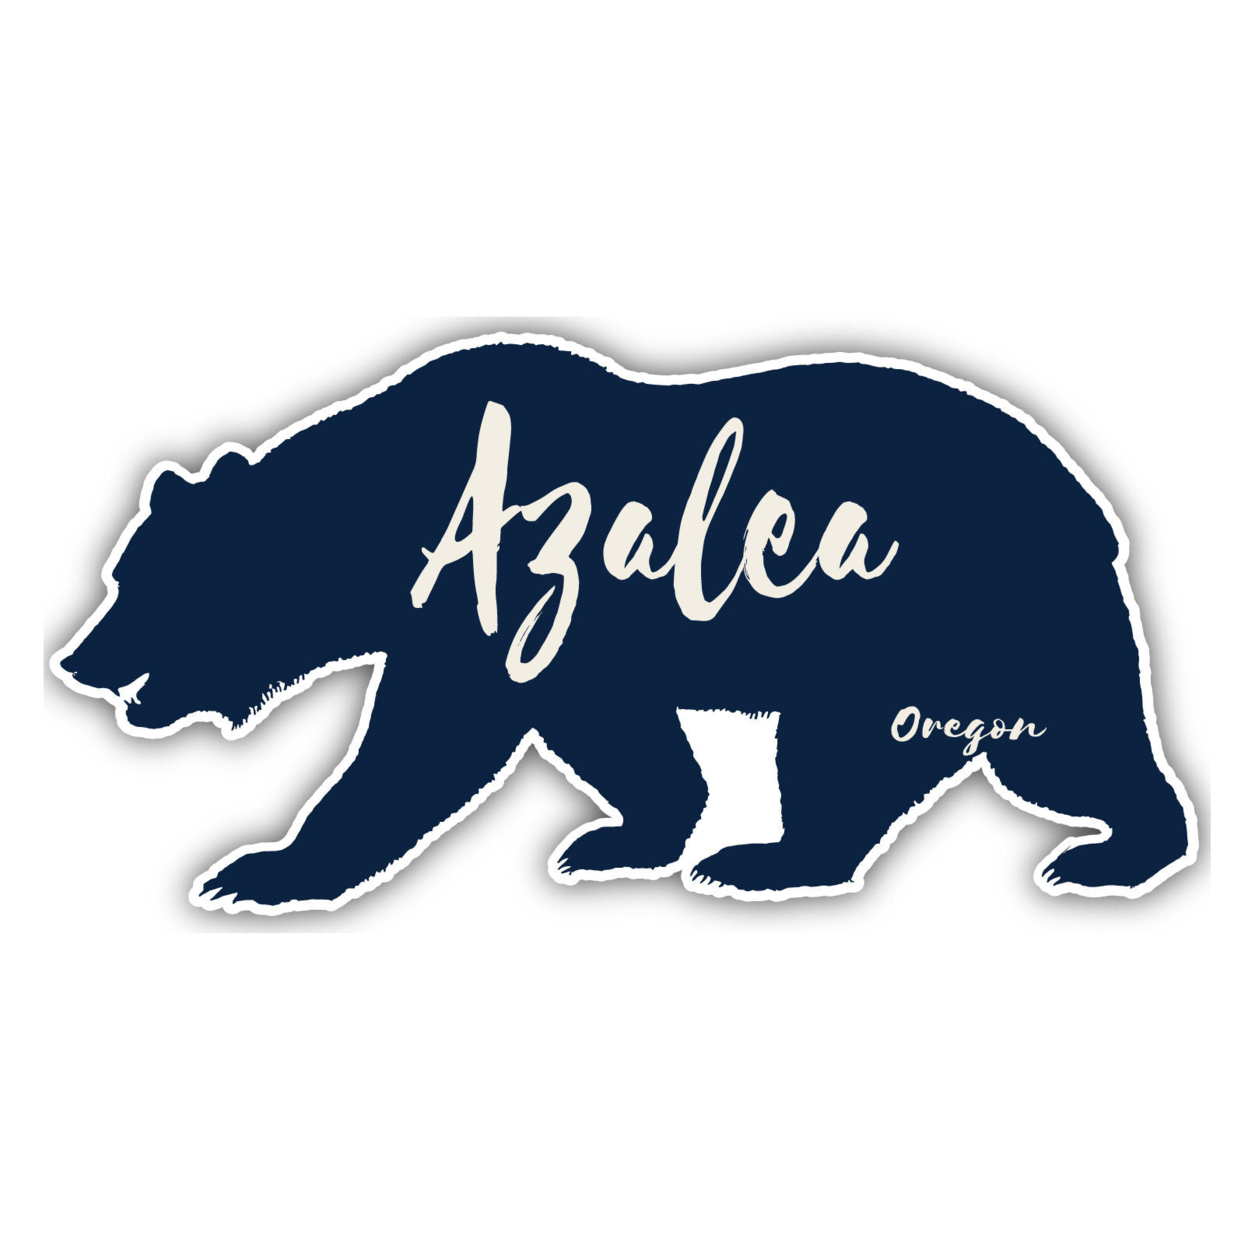 Azalea Oregon Souvenir Decorative Stickers (Choose Theme And Size) - 4-Pack, 4-Inch, Bear